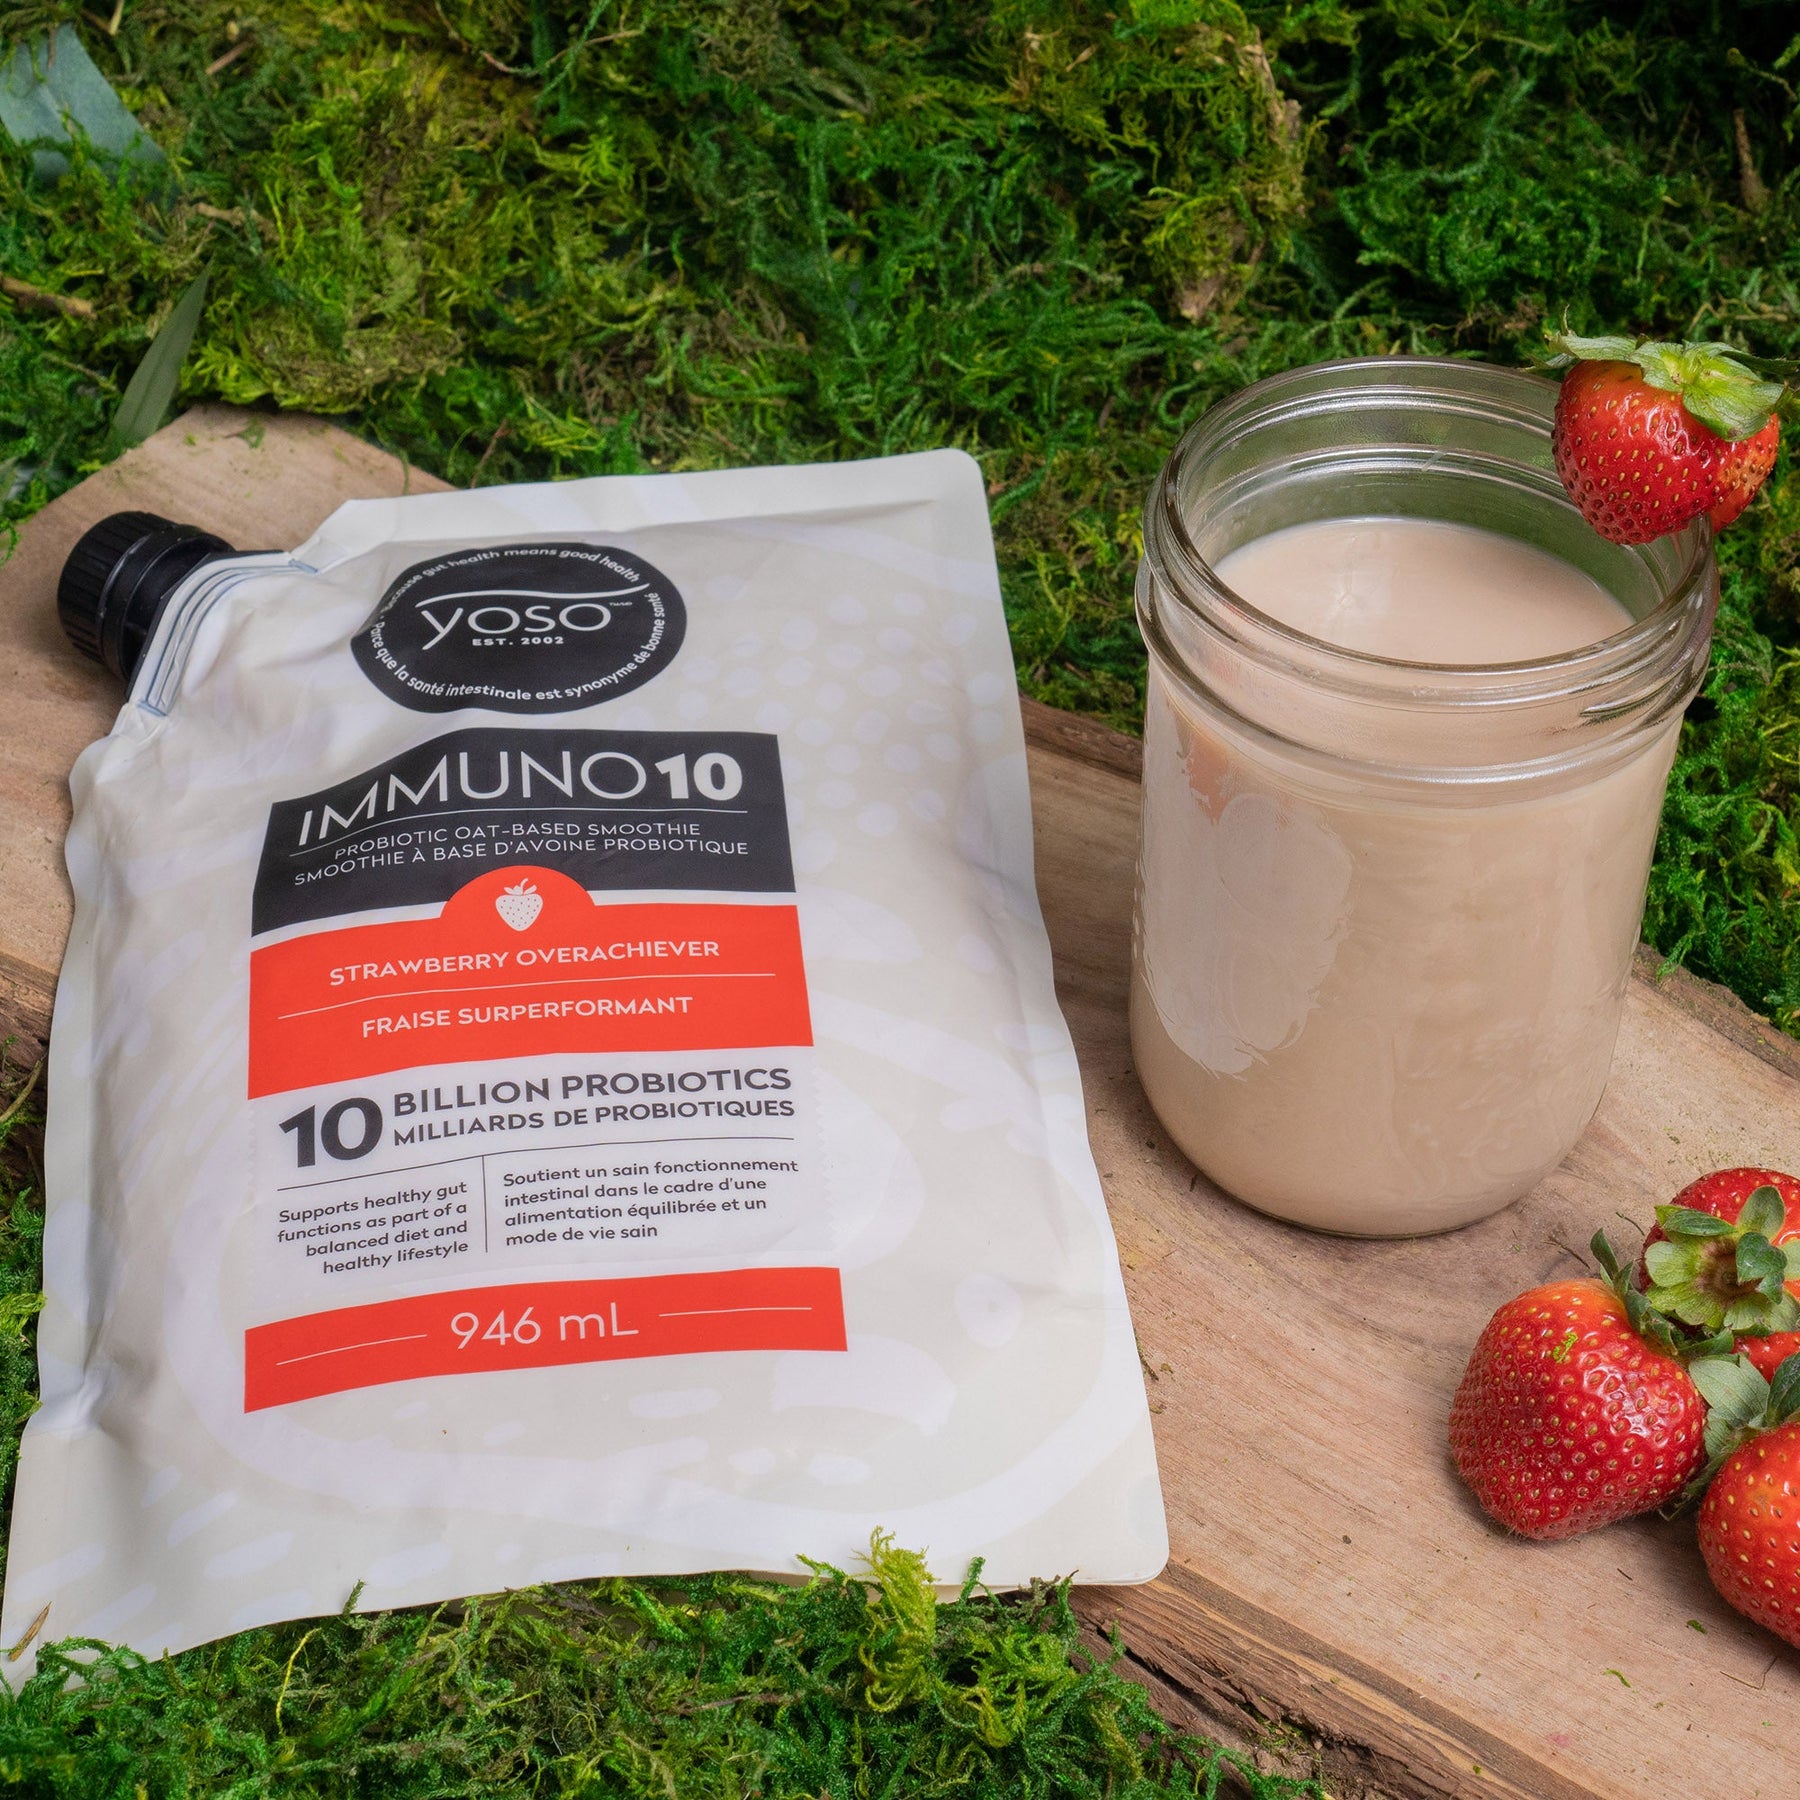 IMMUNO10 Probiotic Oat-Based Smoothie Case - Strawberry 946g